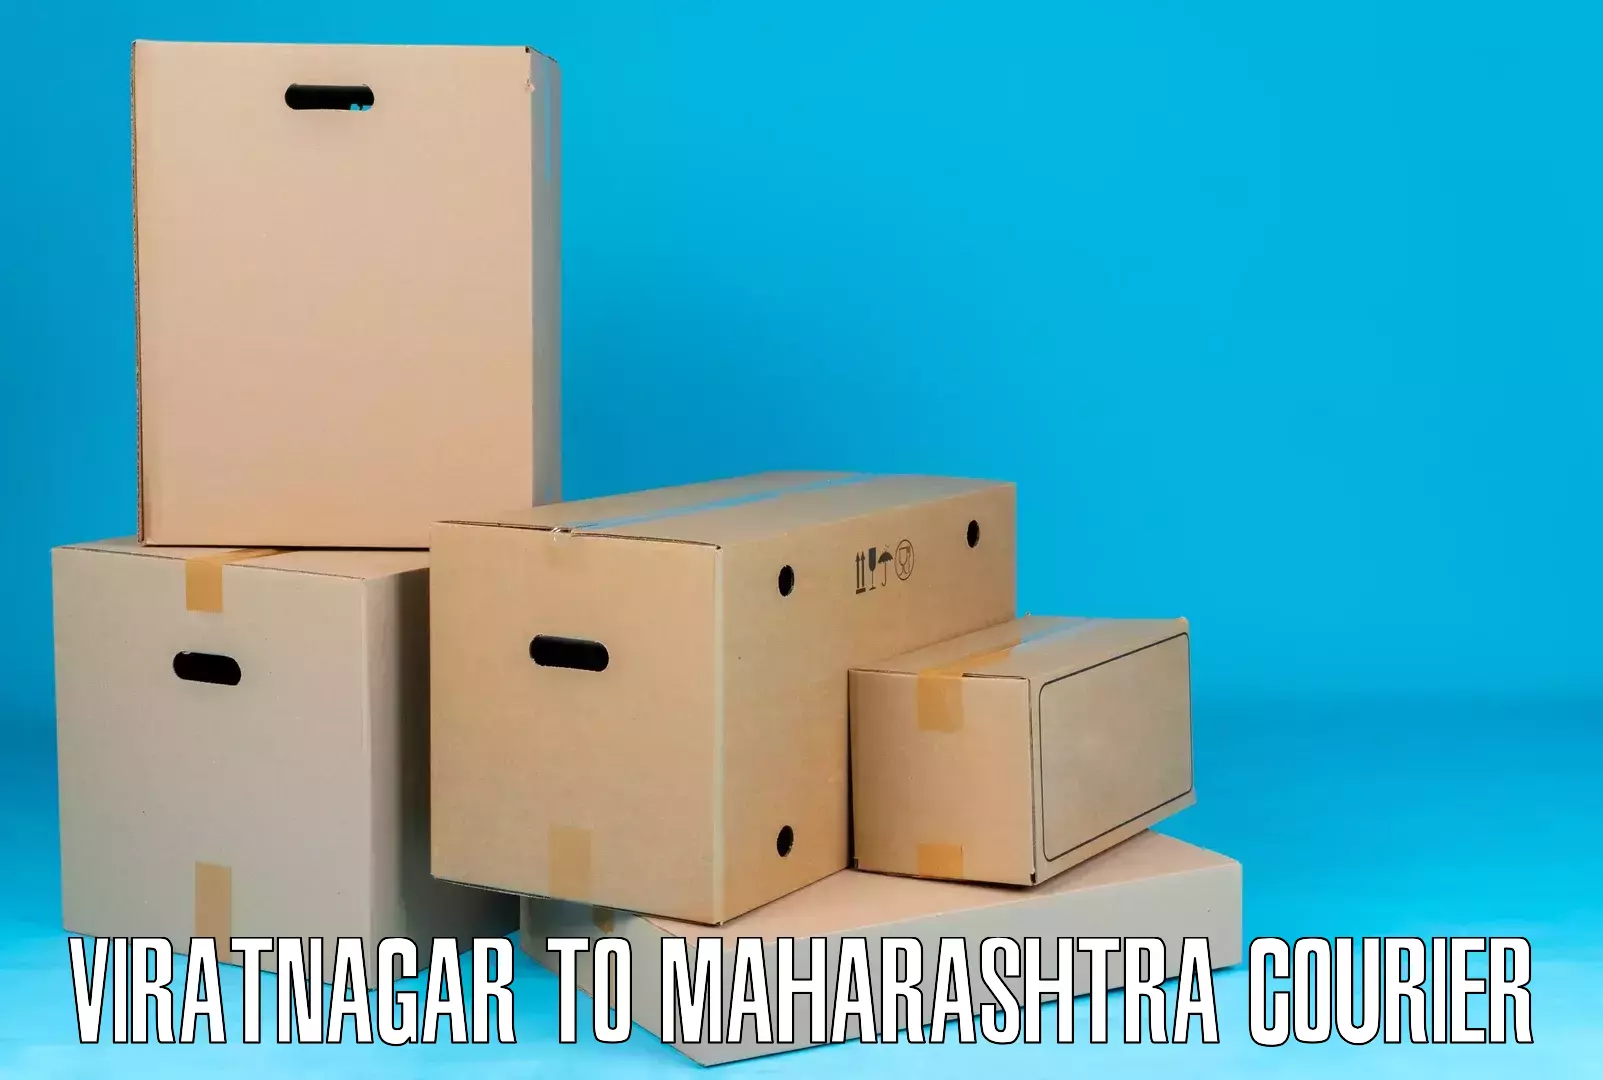 Global logistics network Viratnagar to Yavatmal